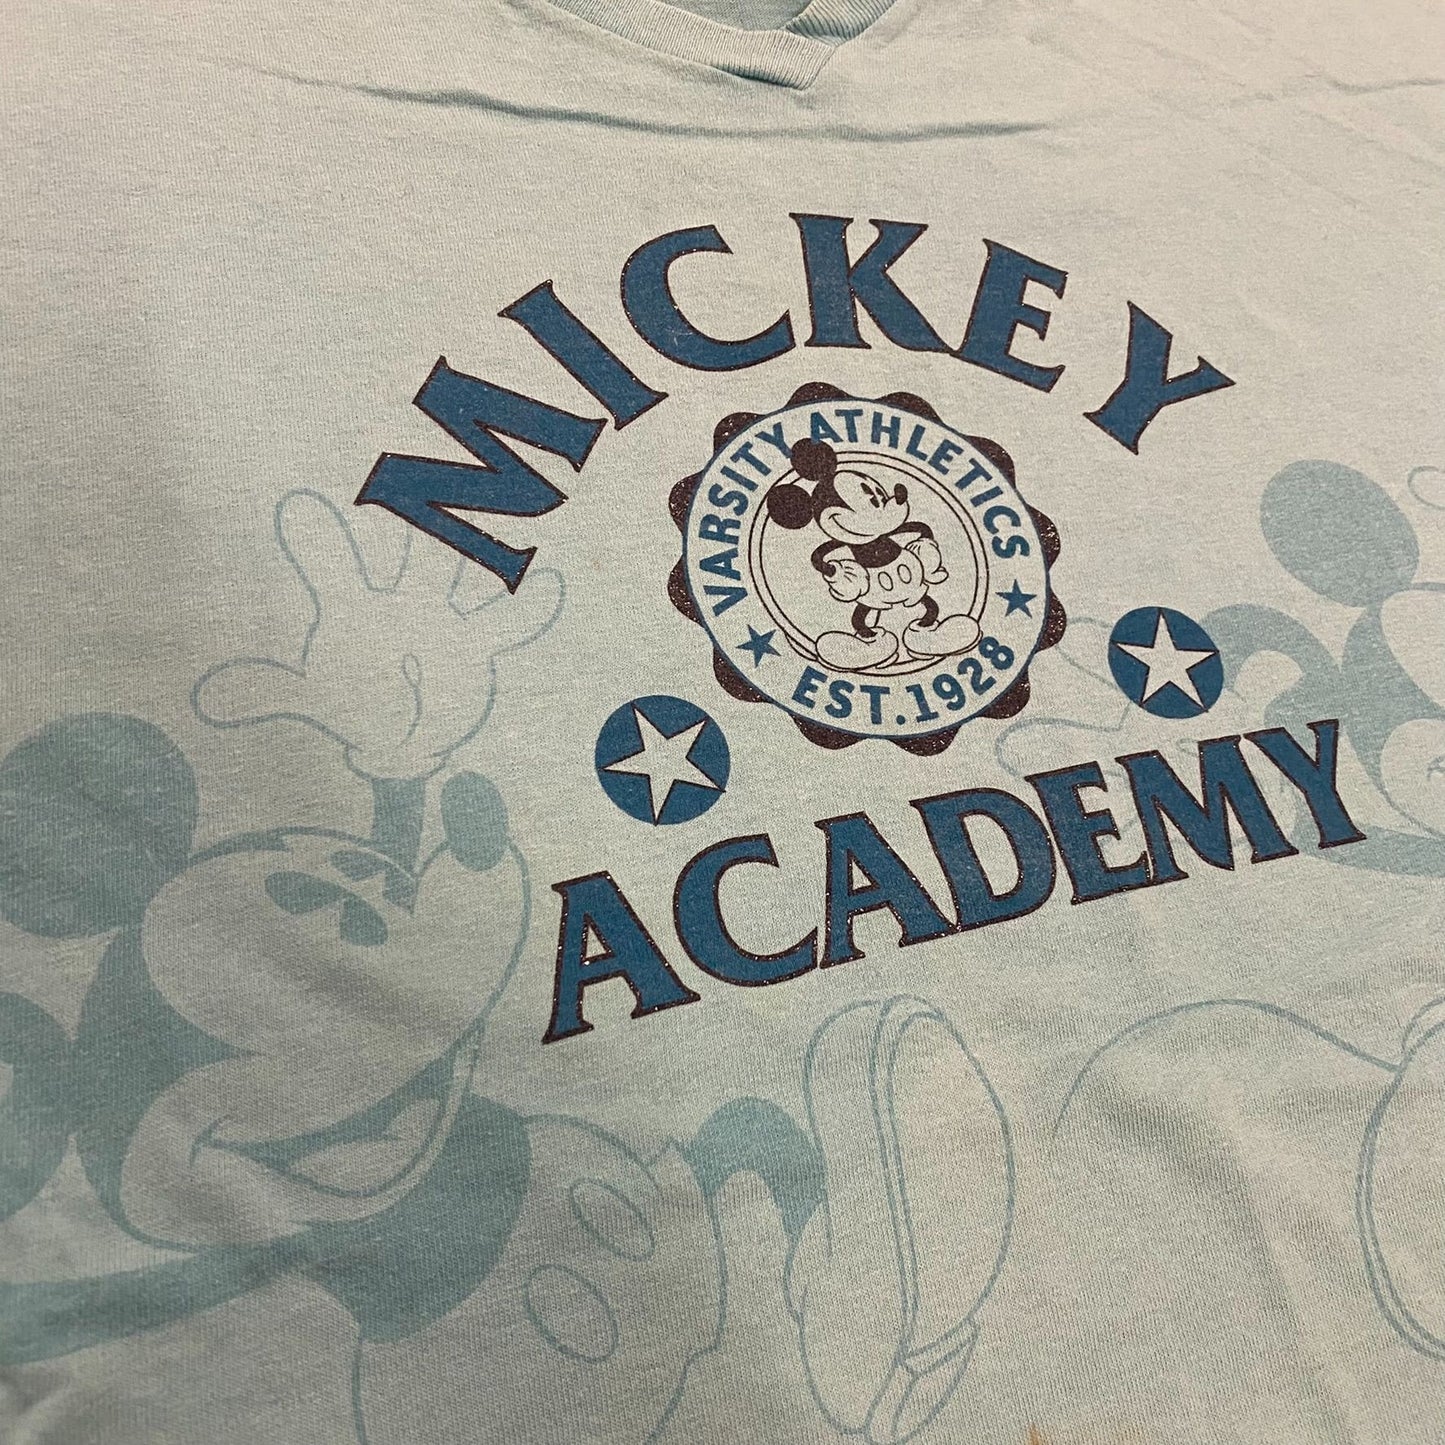 Mickey Academy Vintage T-Shirt